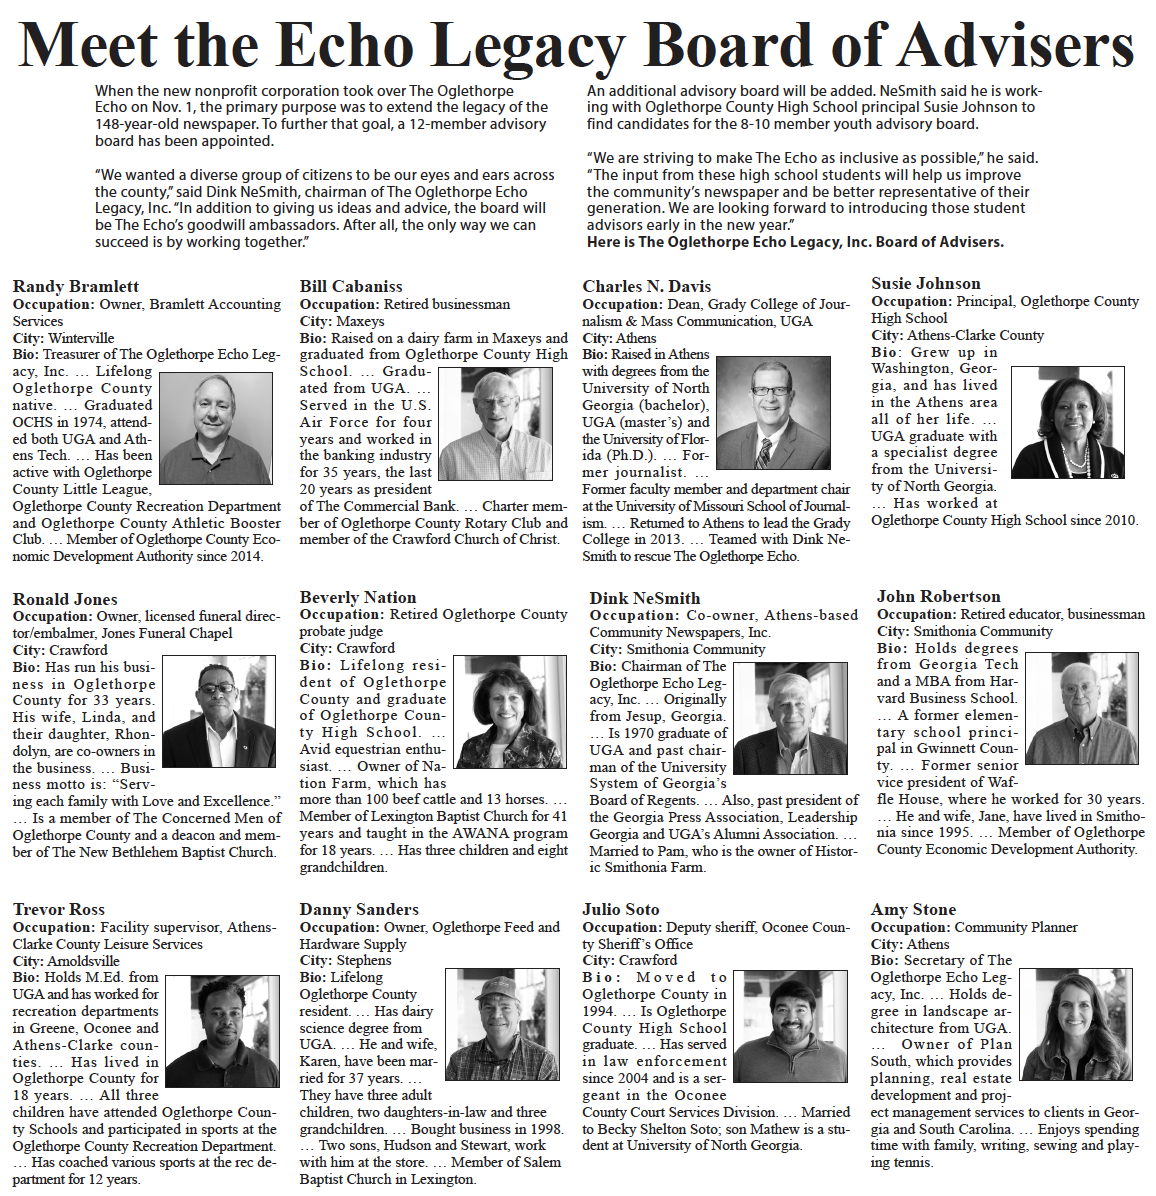 The Echo Legacy Board of Directors